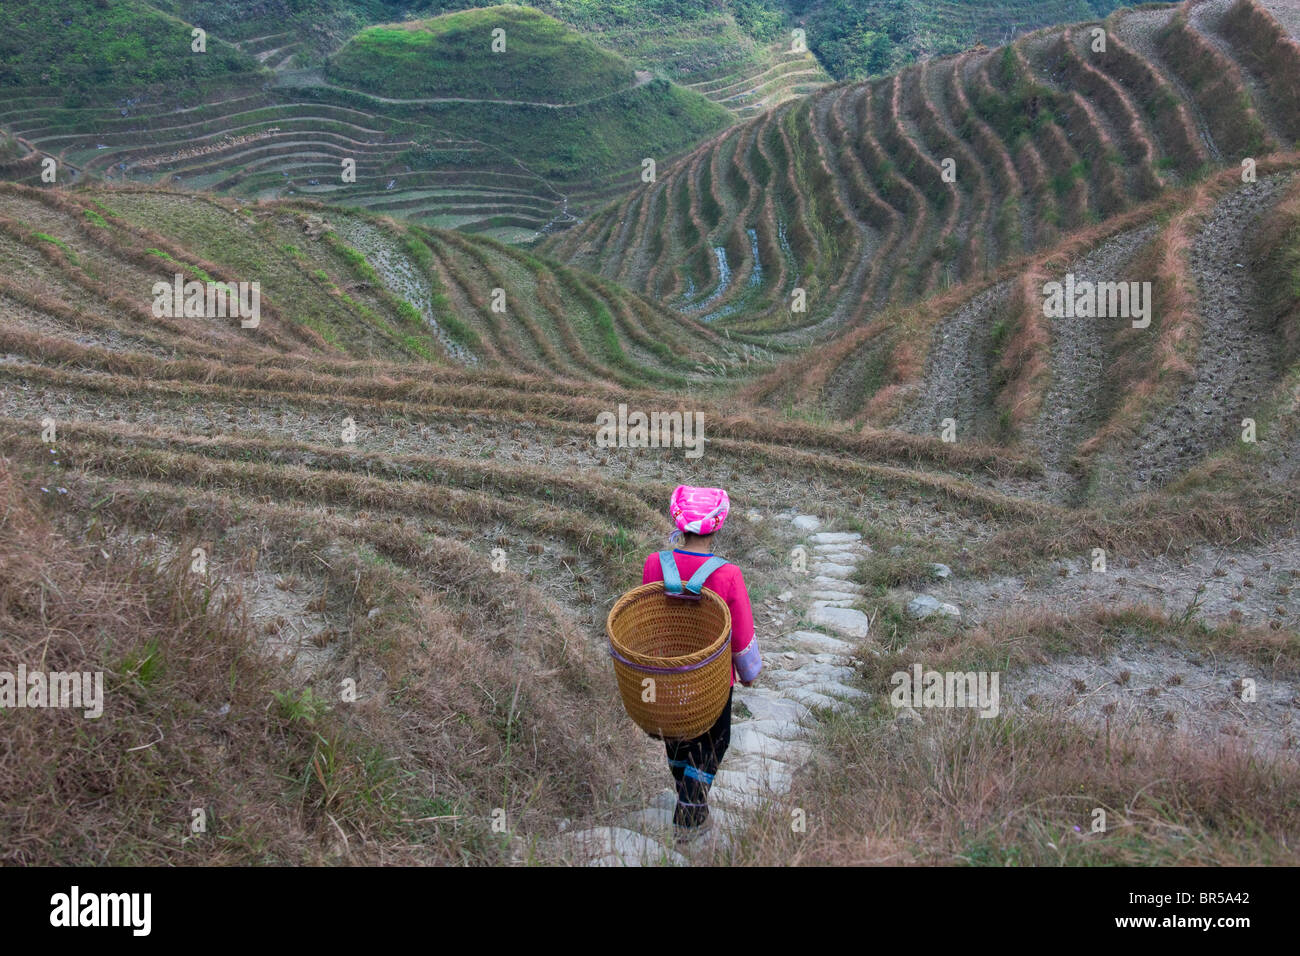 Zhuang girl carrying basket dans la montagne, Longsheng, Guangxi, Chine Banque D'Images